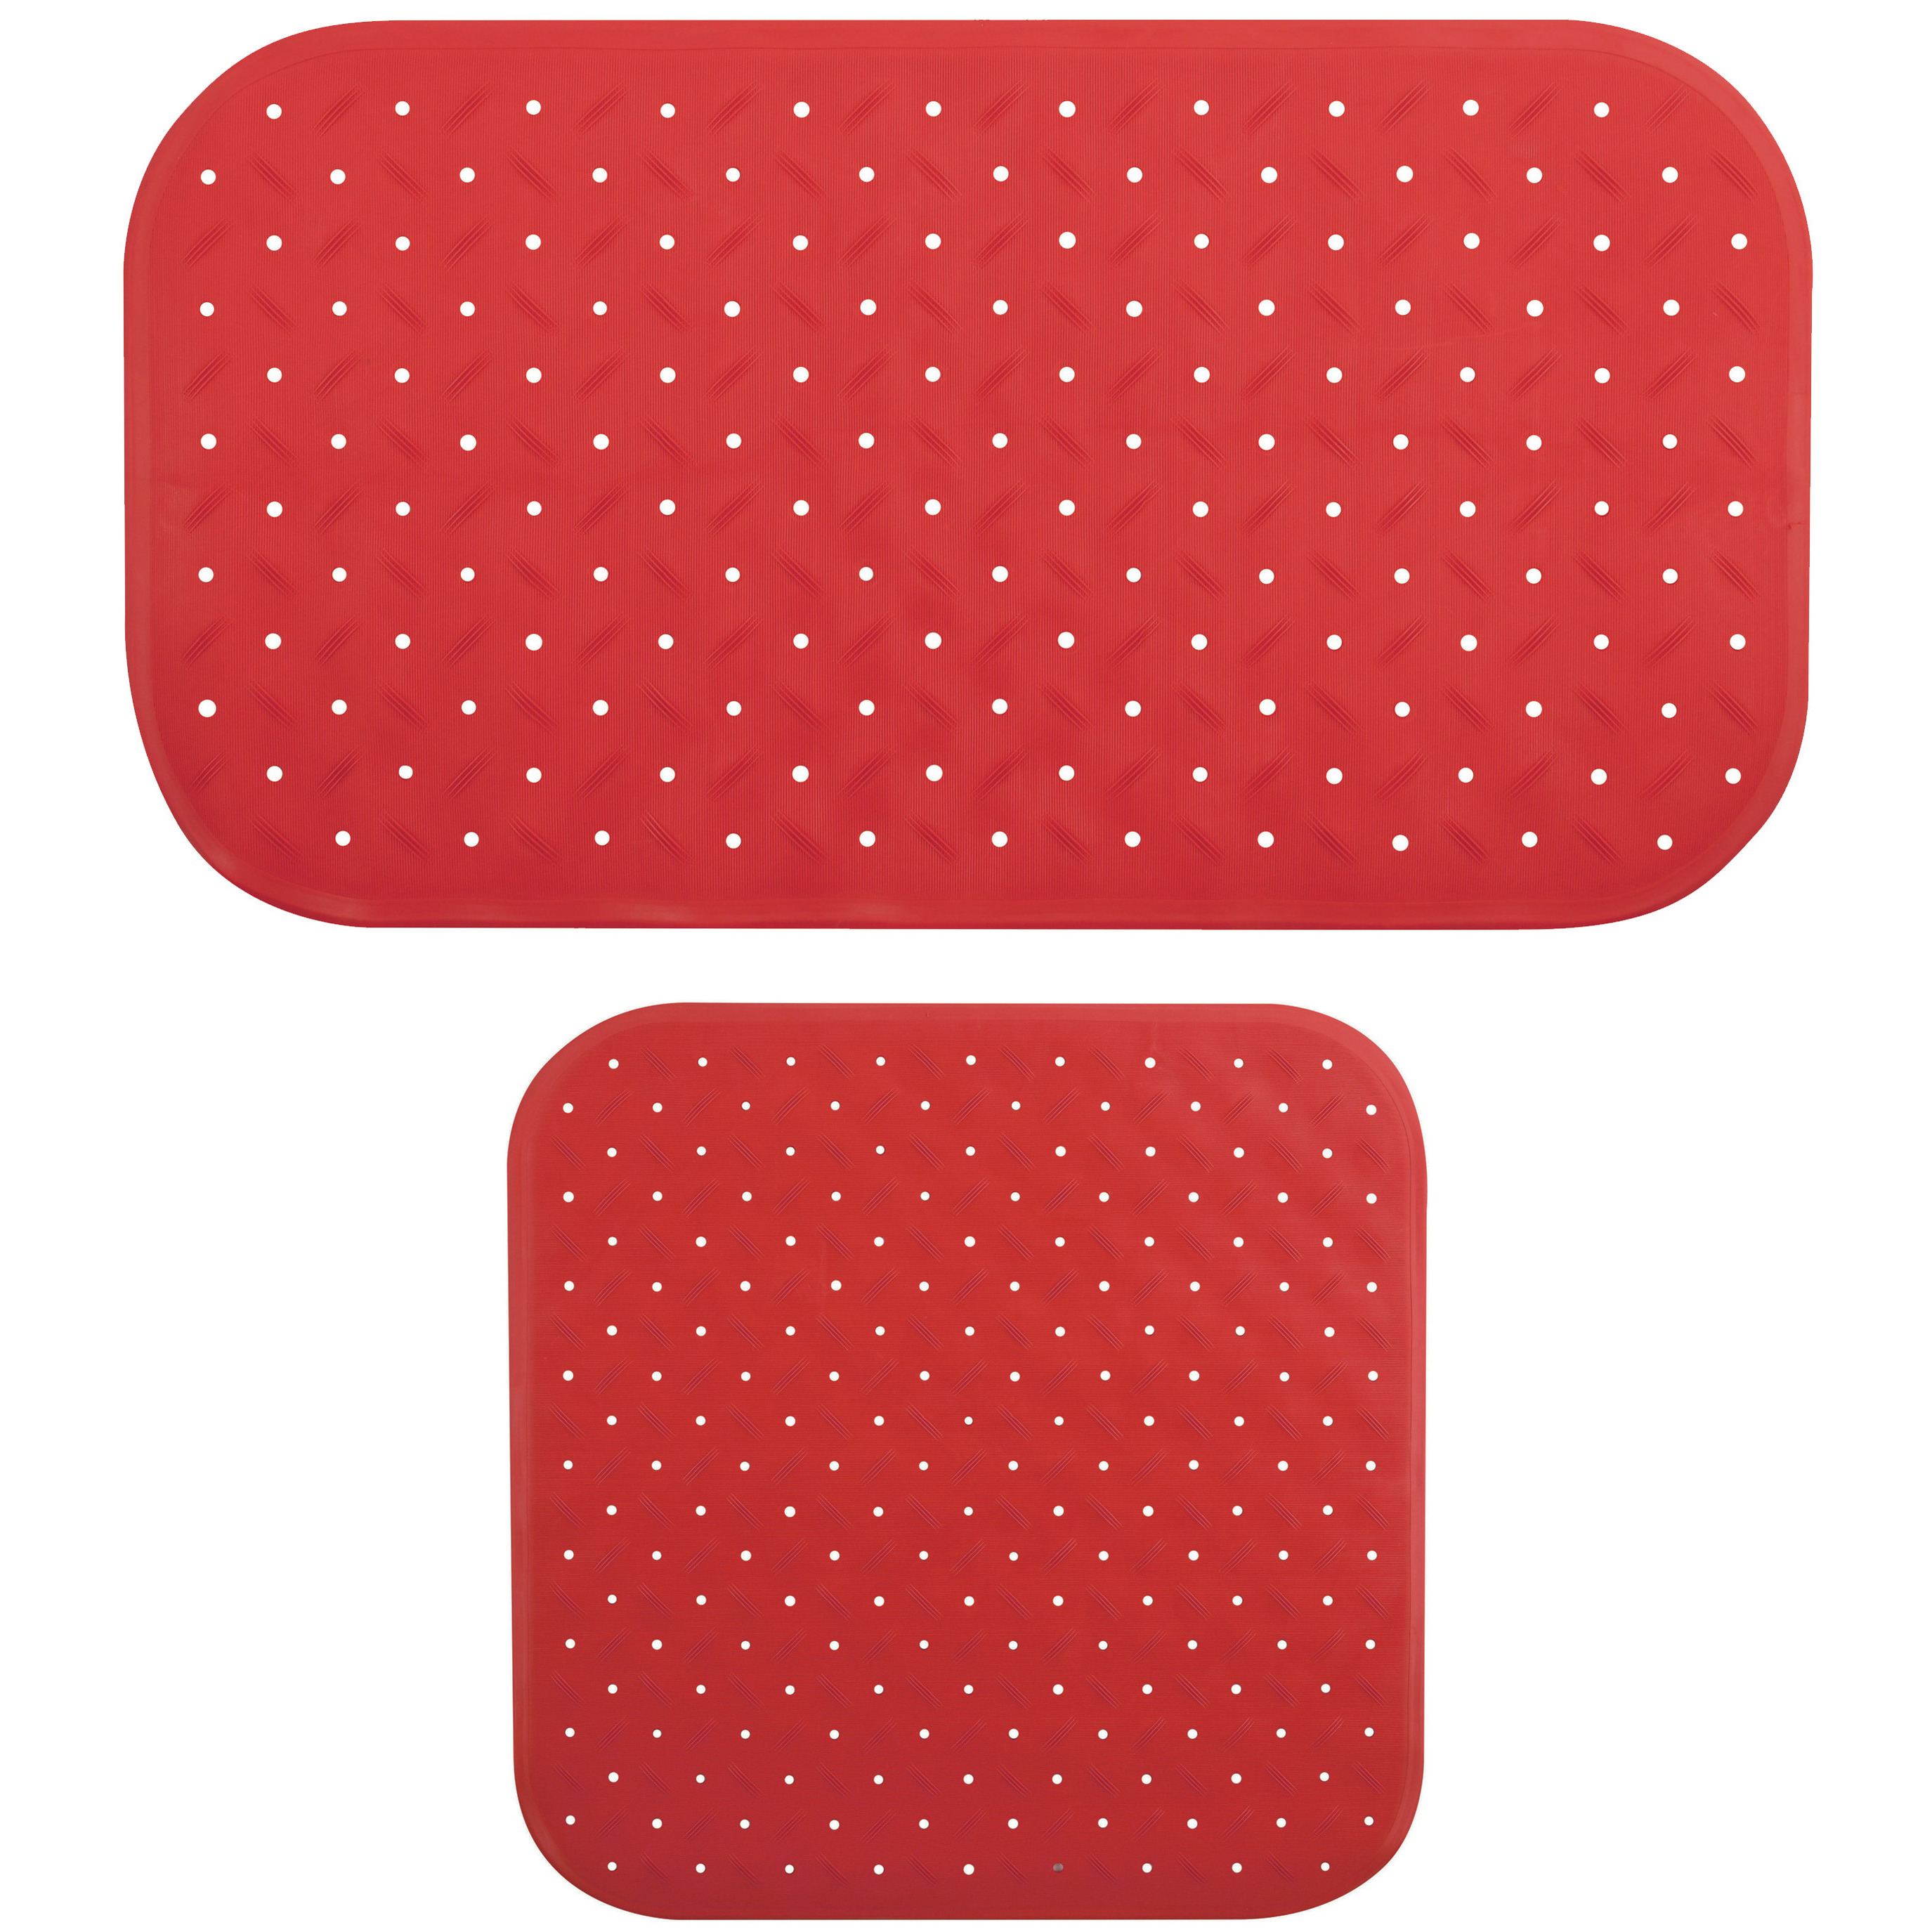 MSV Douche-bad anti-slip matten set badkamer rubber 2x stuks rood 2 formaten